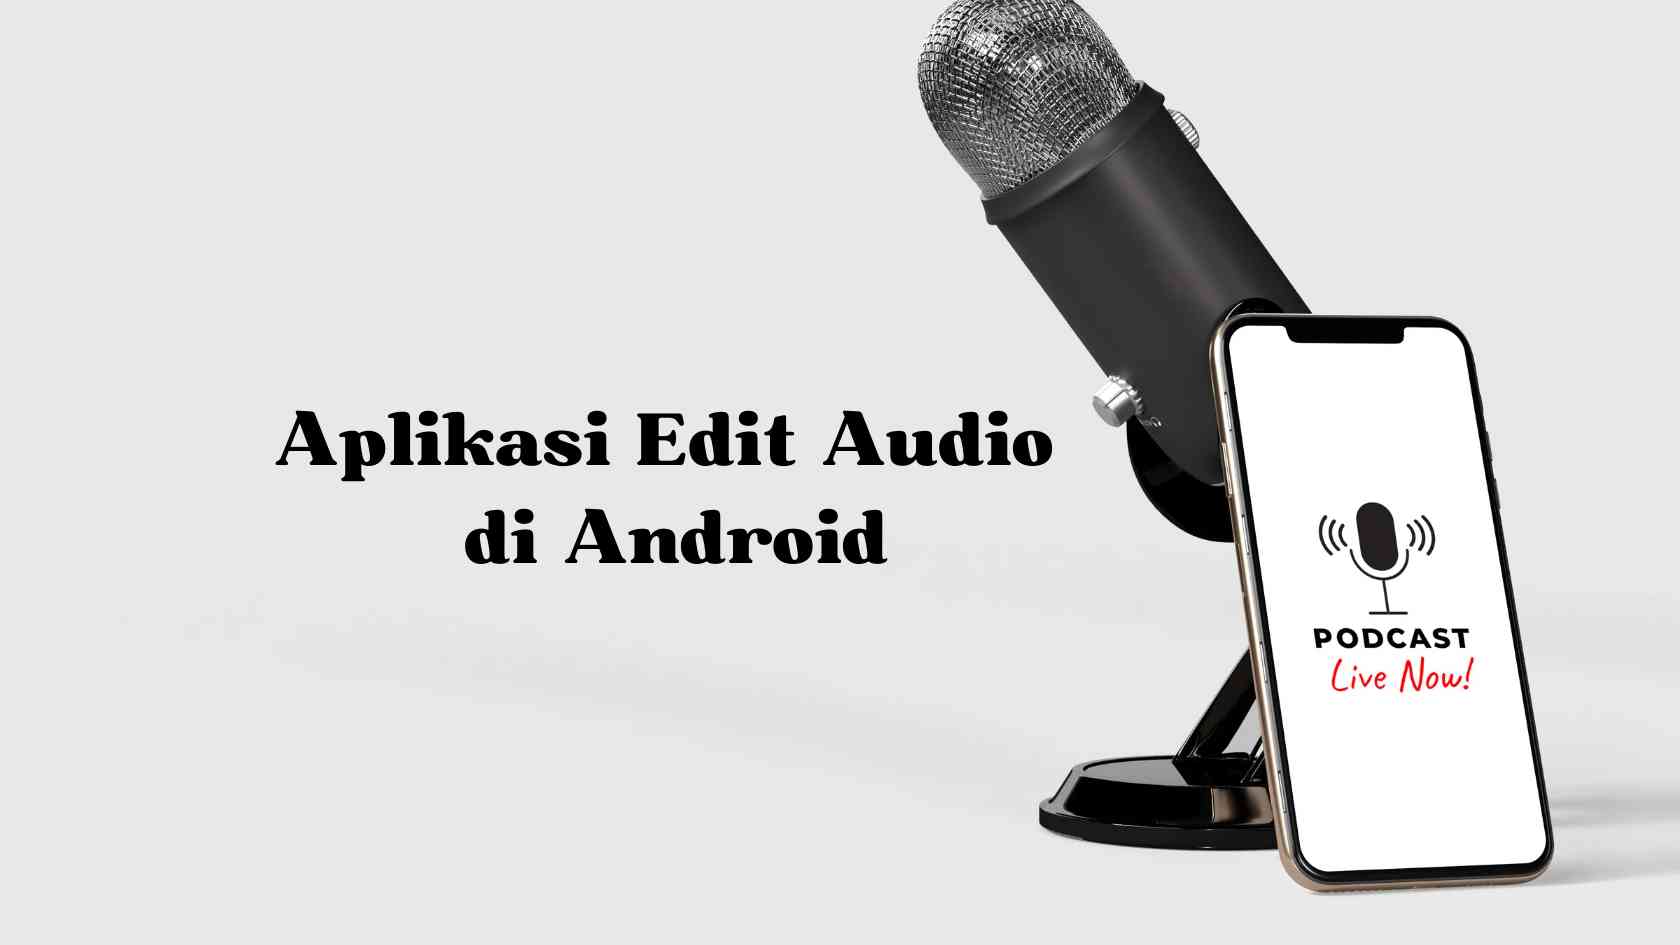 Aplikasi Edit Suara Android